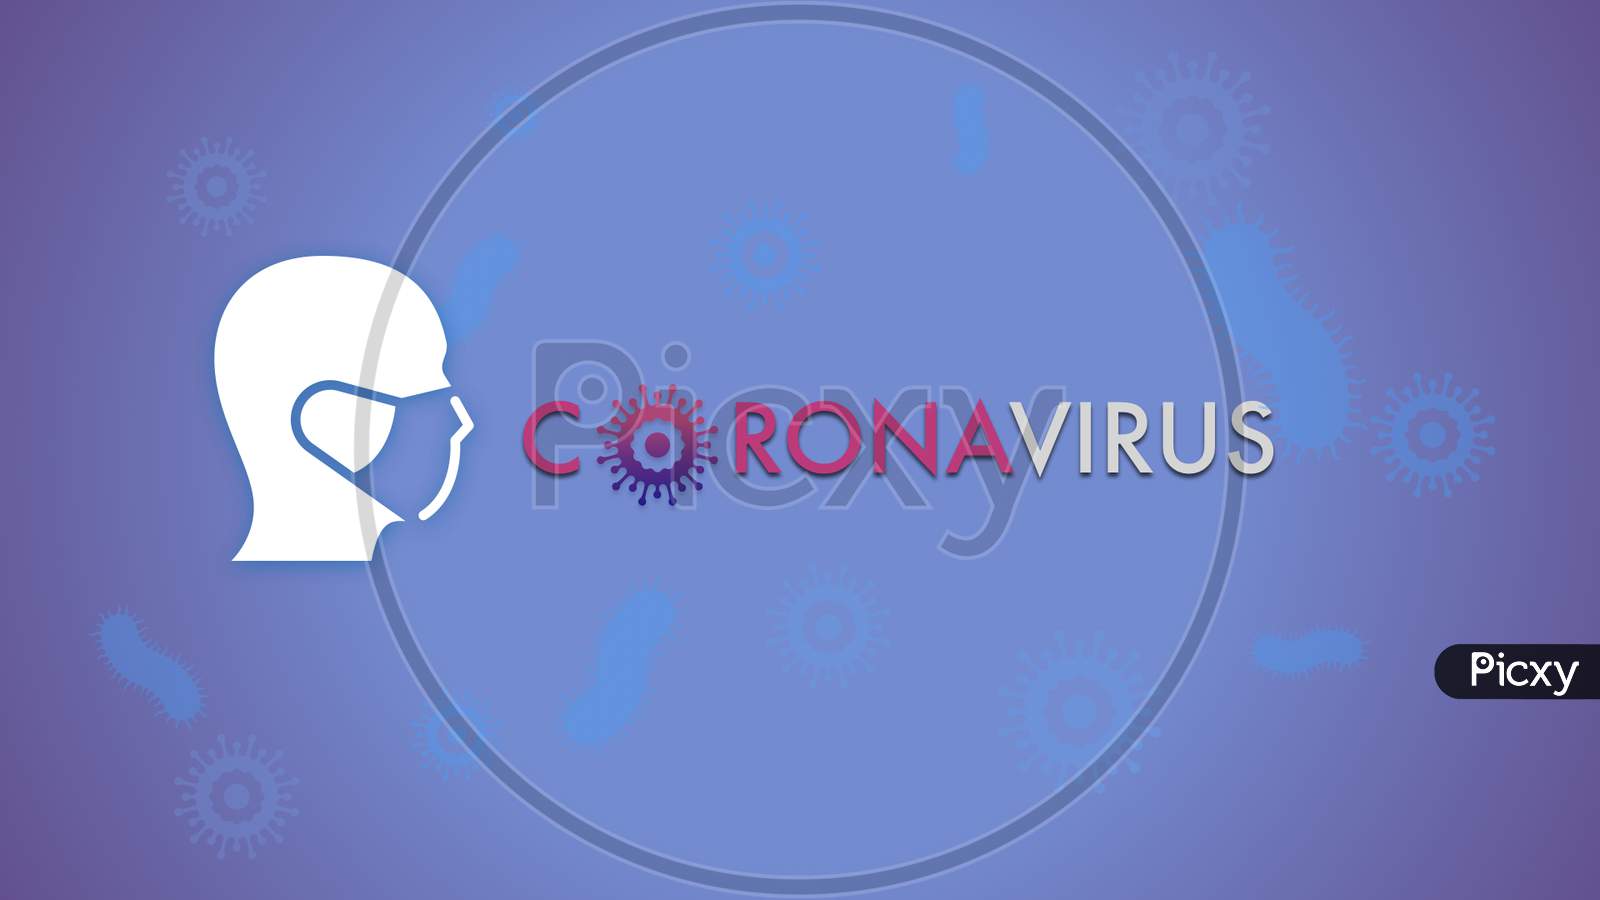 Corona Virus 2020, Alert background design